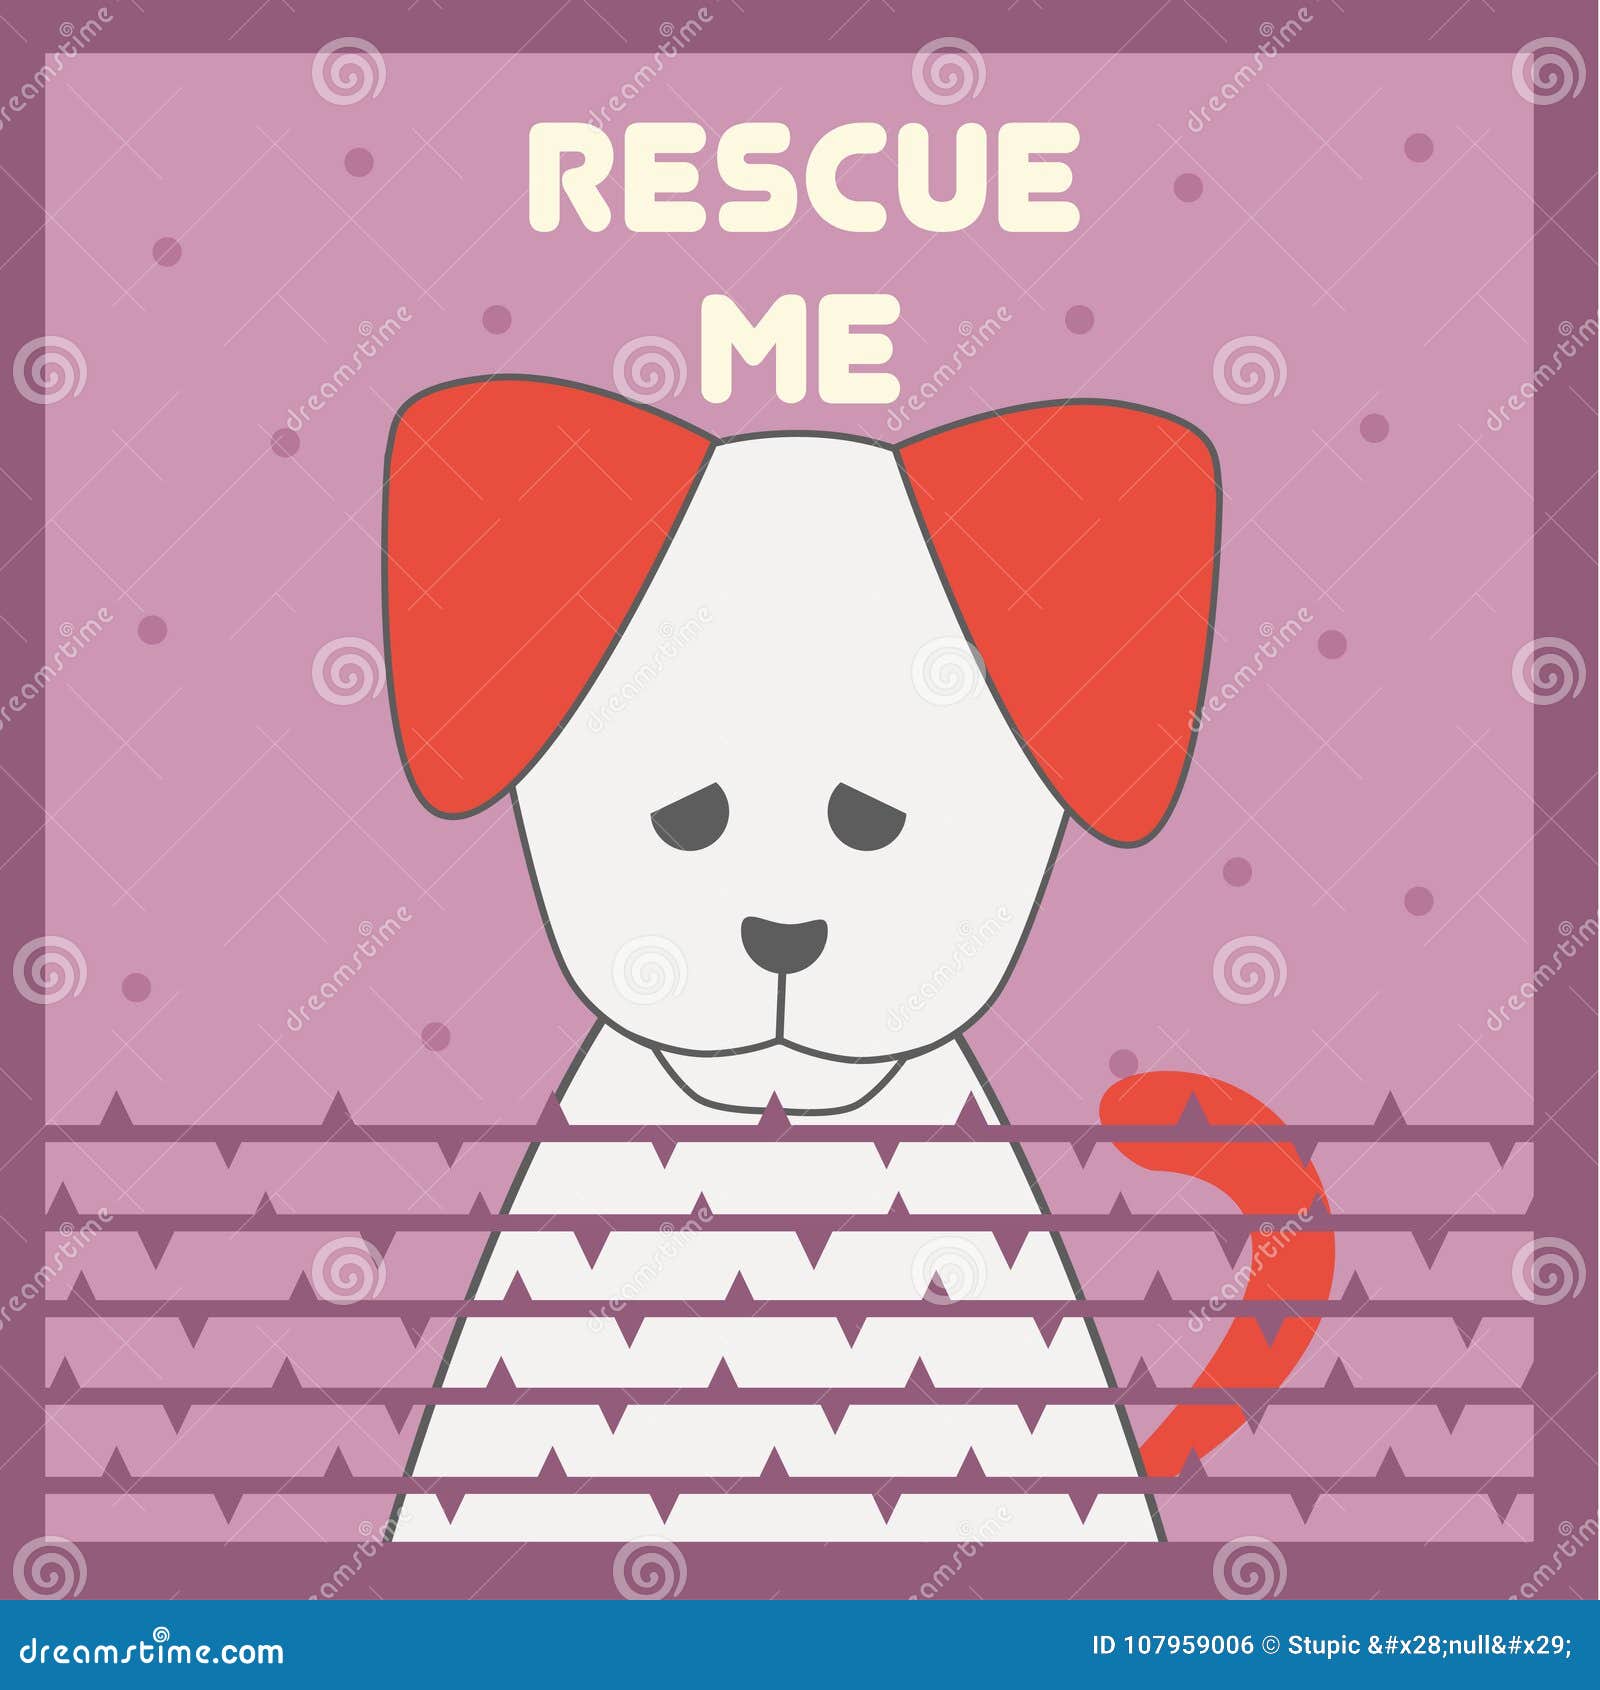 Download Animal Rescue Illustration Vector Art Logo Stock ...